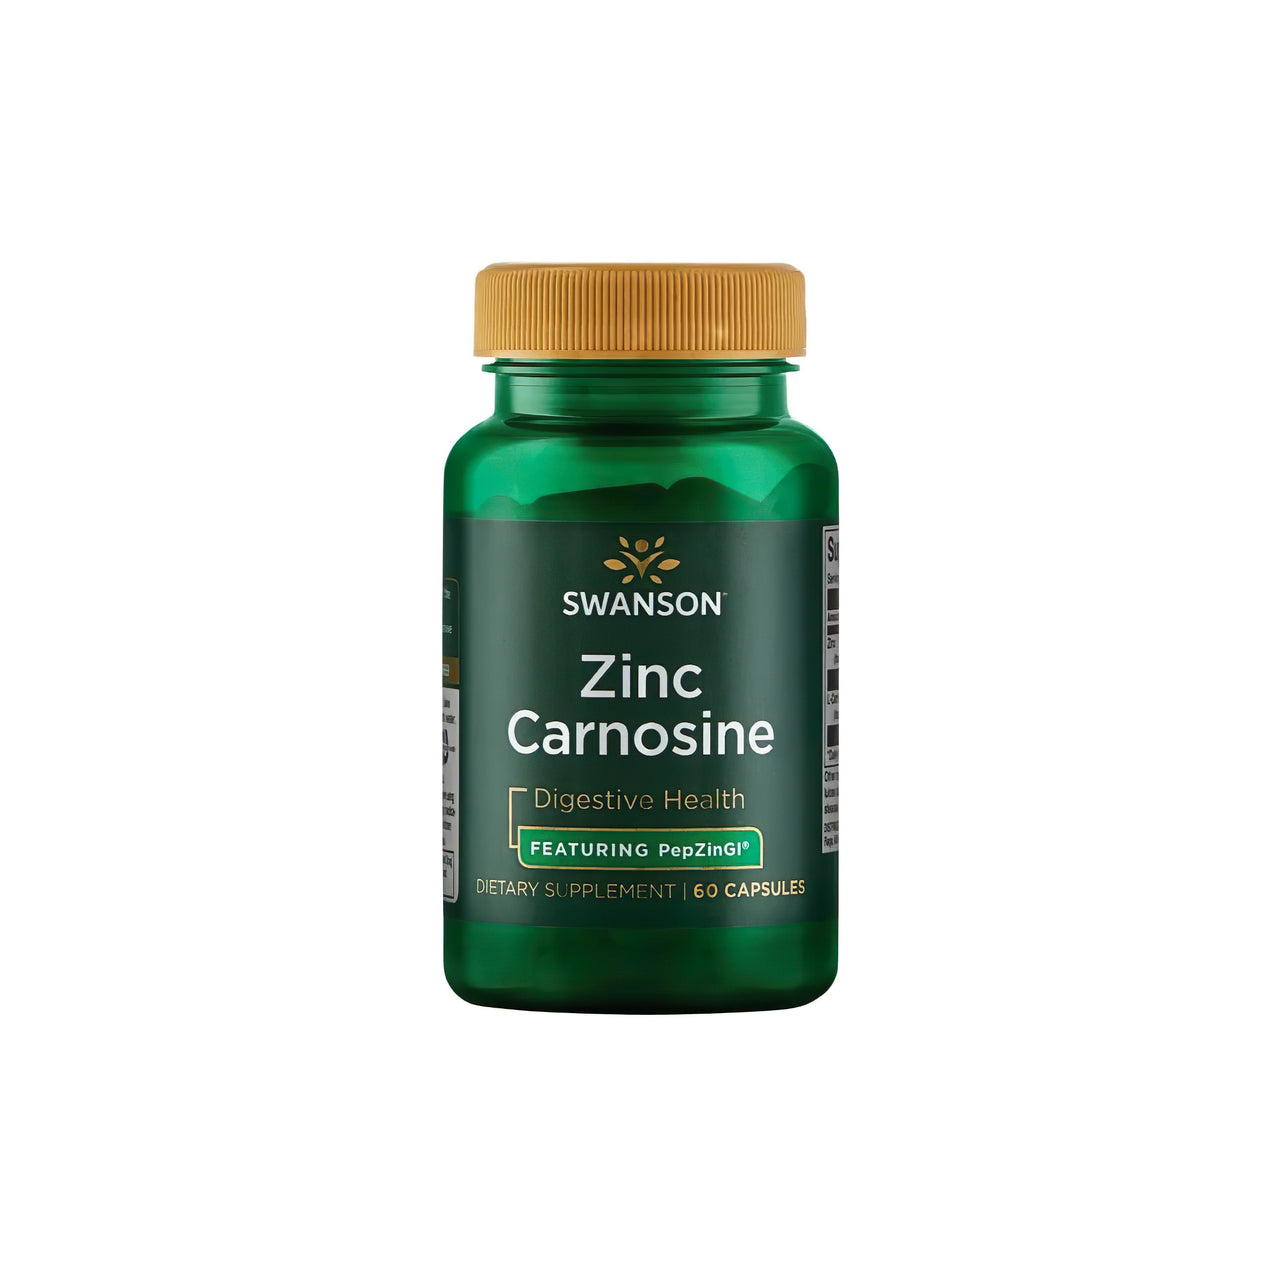 Zinc Carnosine - Featuring PepZinGI 60 caps - front